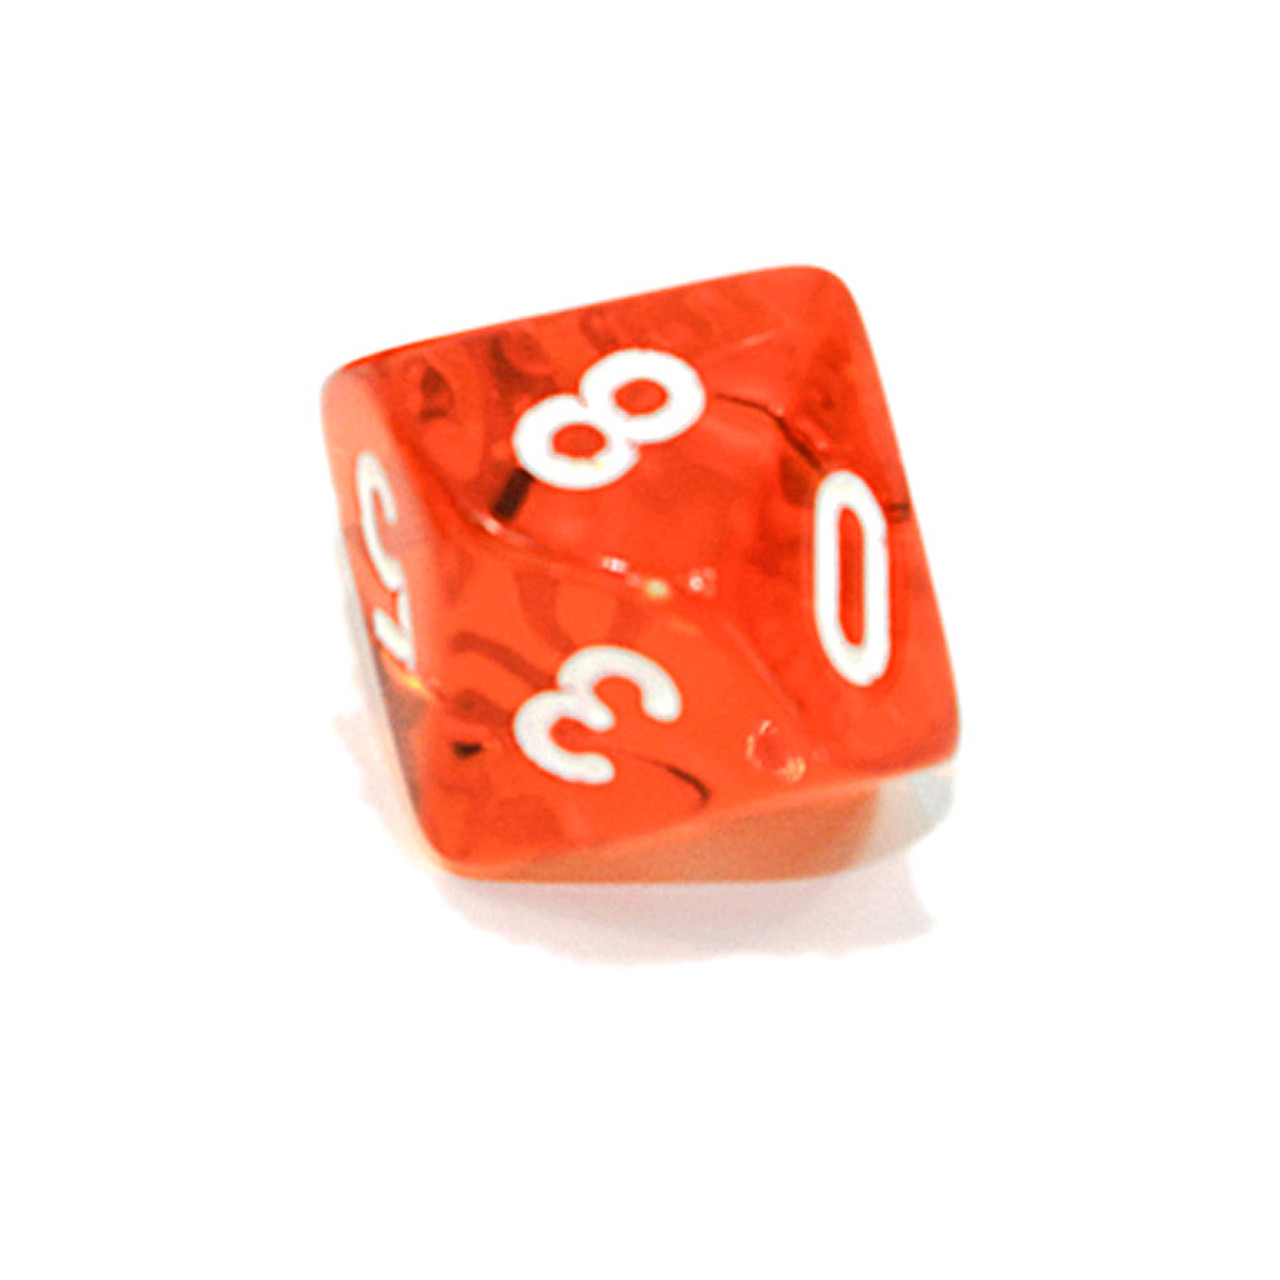 Chessex Dice. Translucent Red/white d4 dice